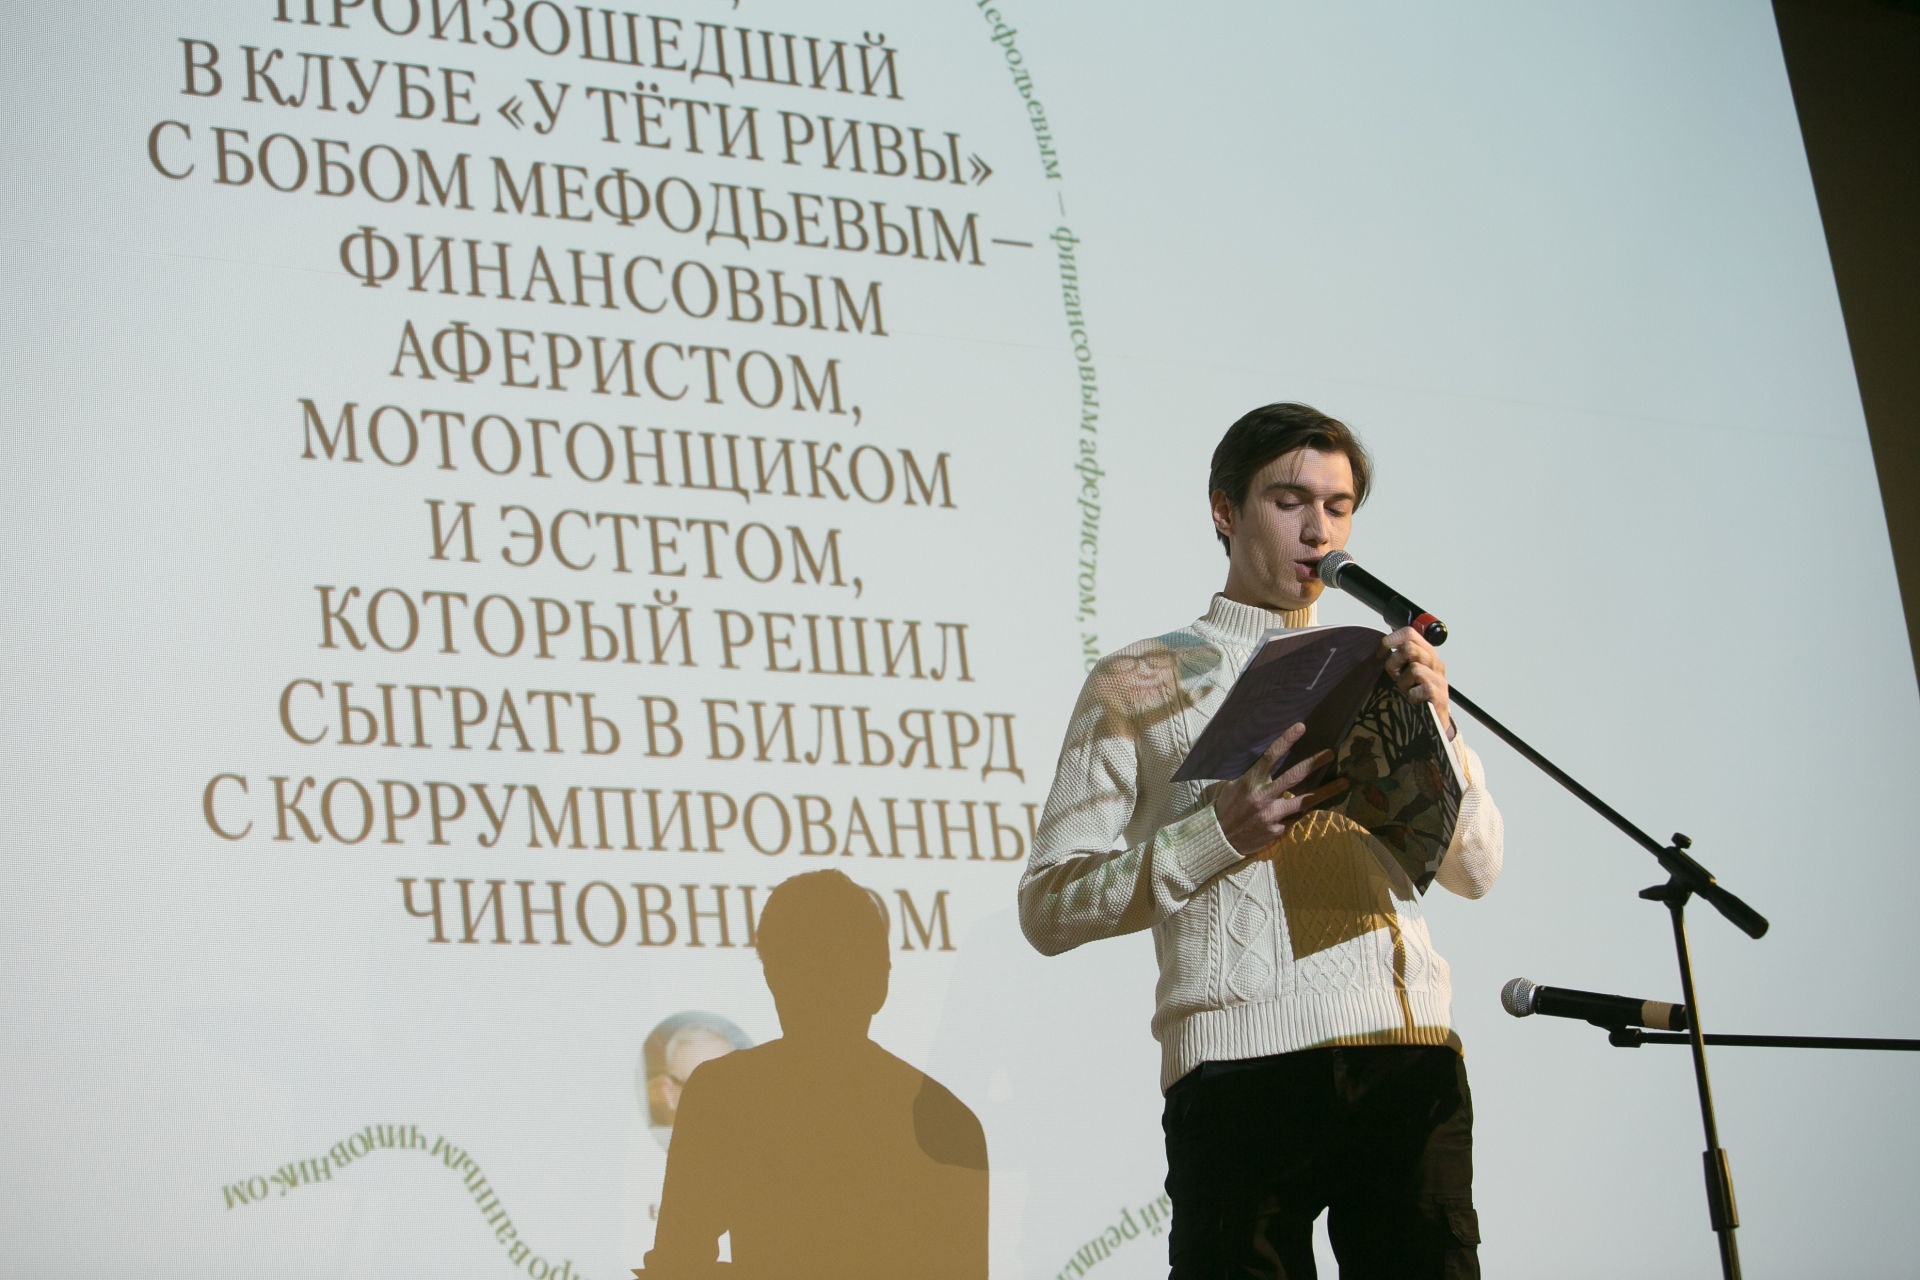 Фоторепортаж с презентации журнала "Казань" 14 марта